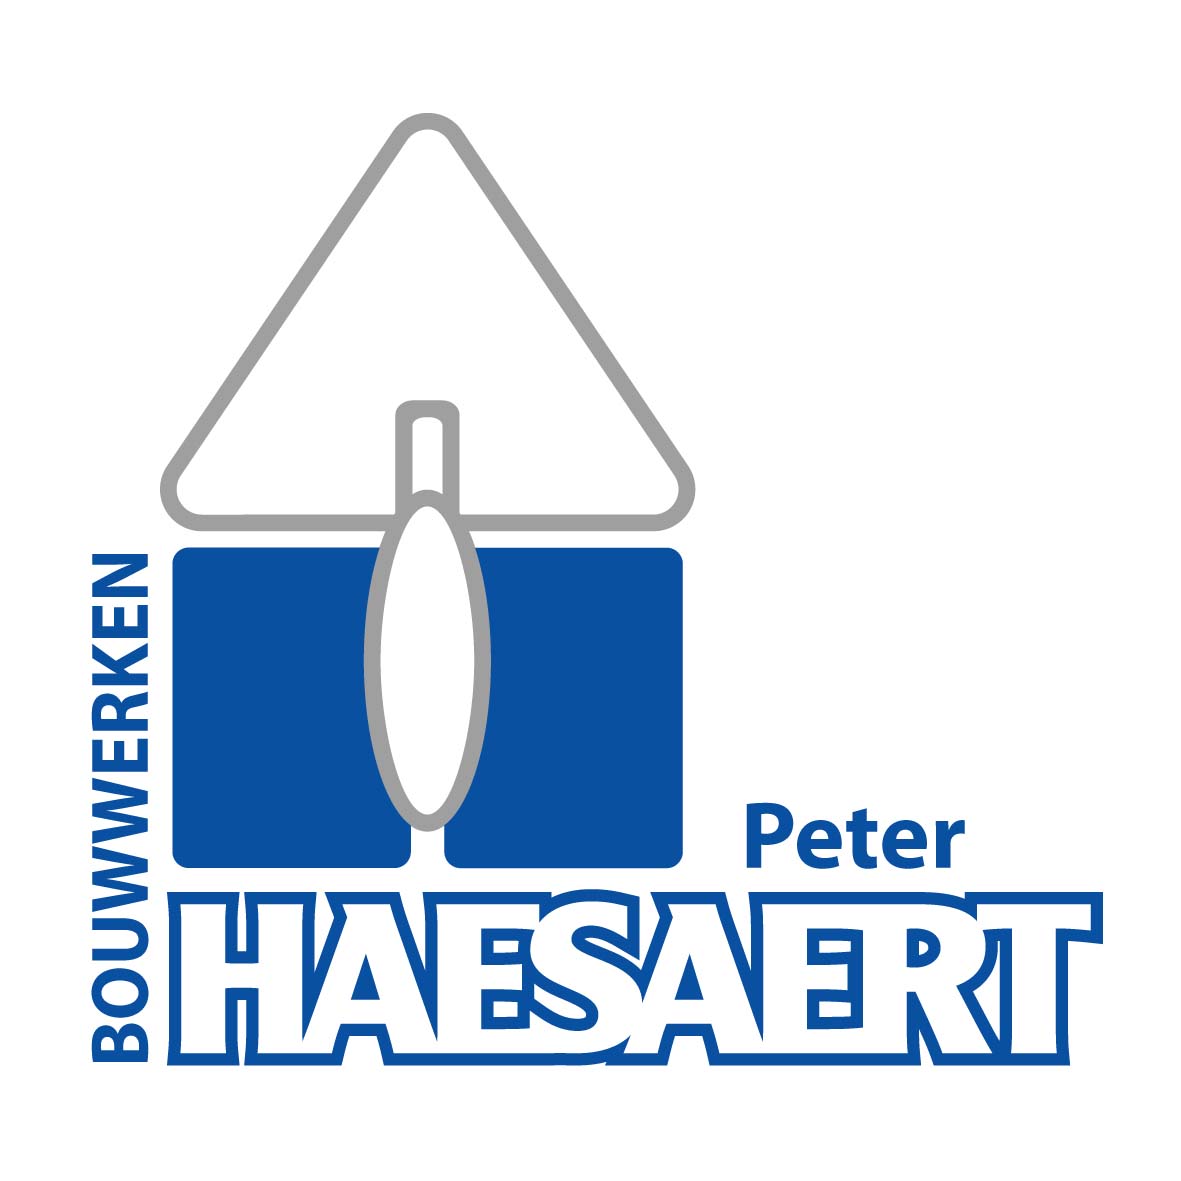 Peter Haesaert